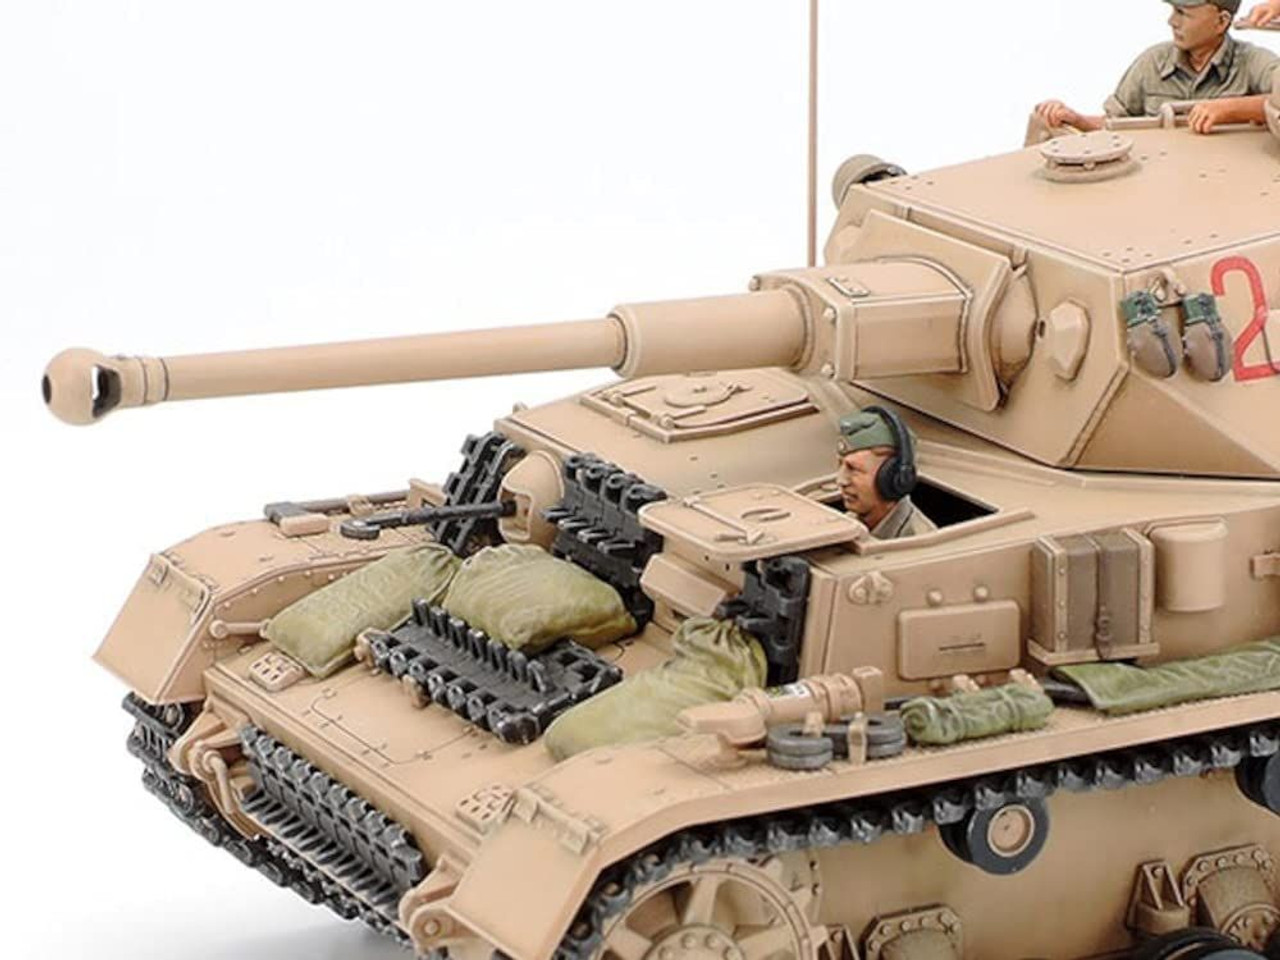 "PanzerKapfWagen IV G-J" Military Modelling Book Japan 9784775308967